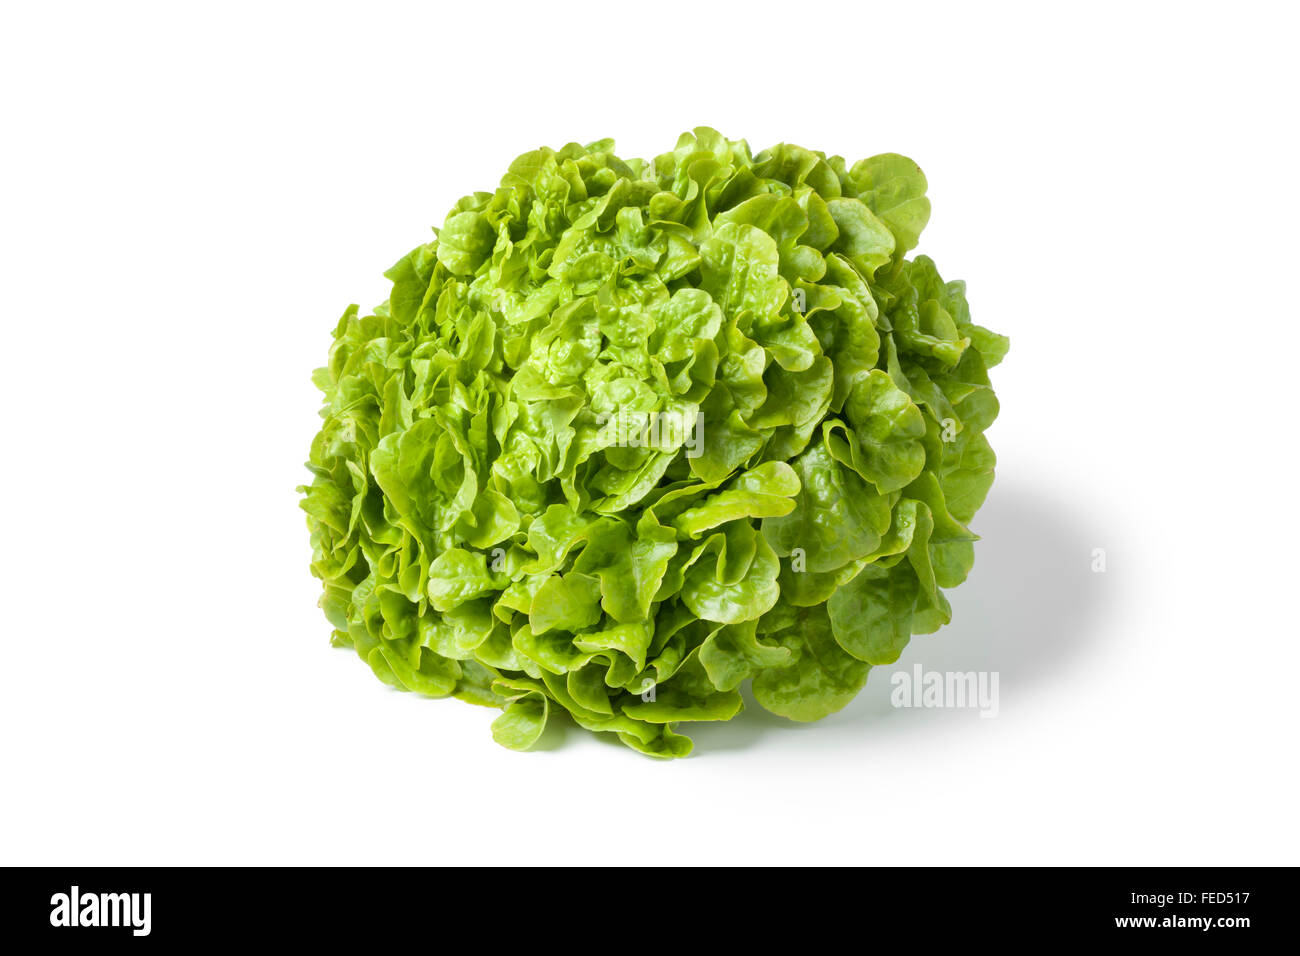 Fresh green oak leaf lettuce on white background Stock Photo